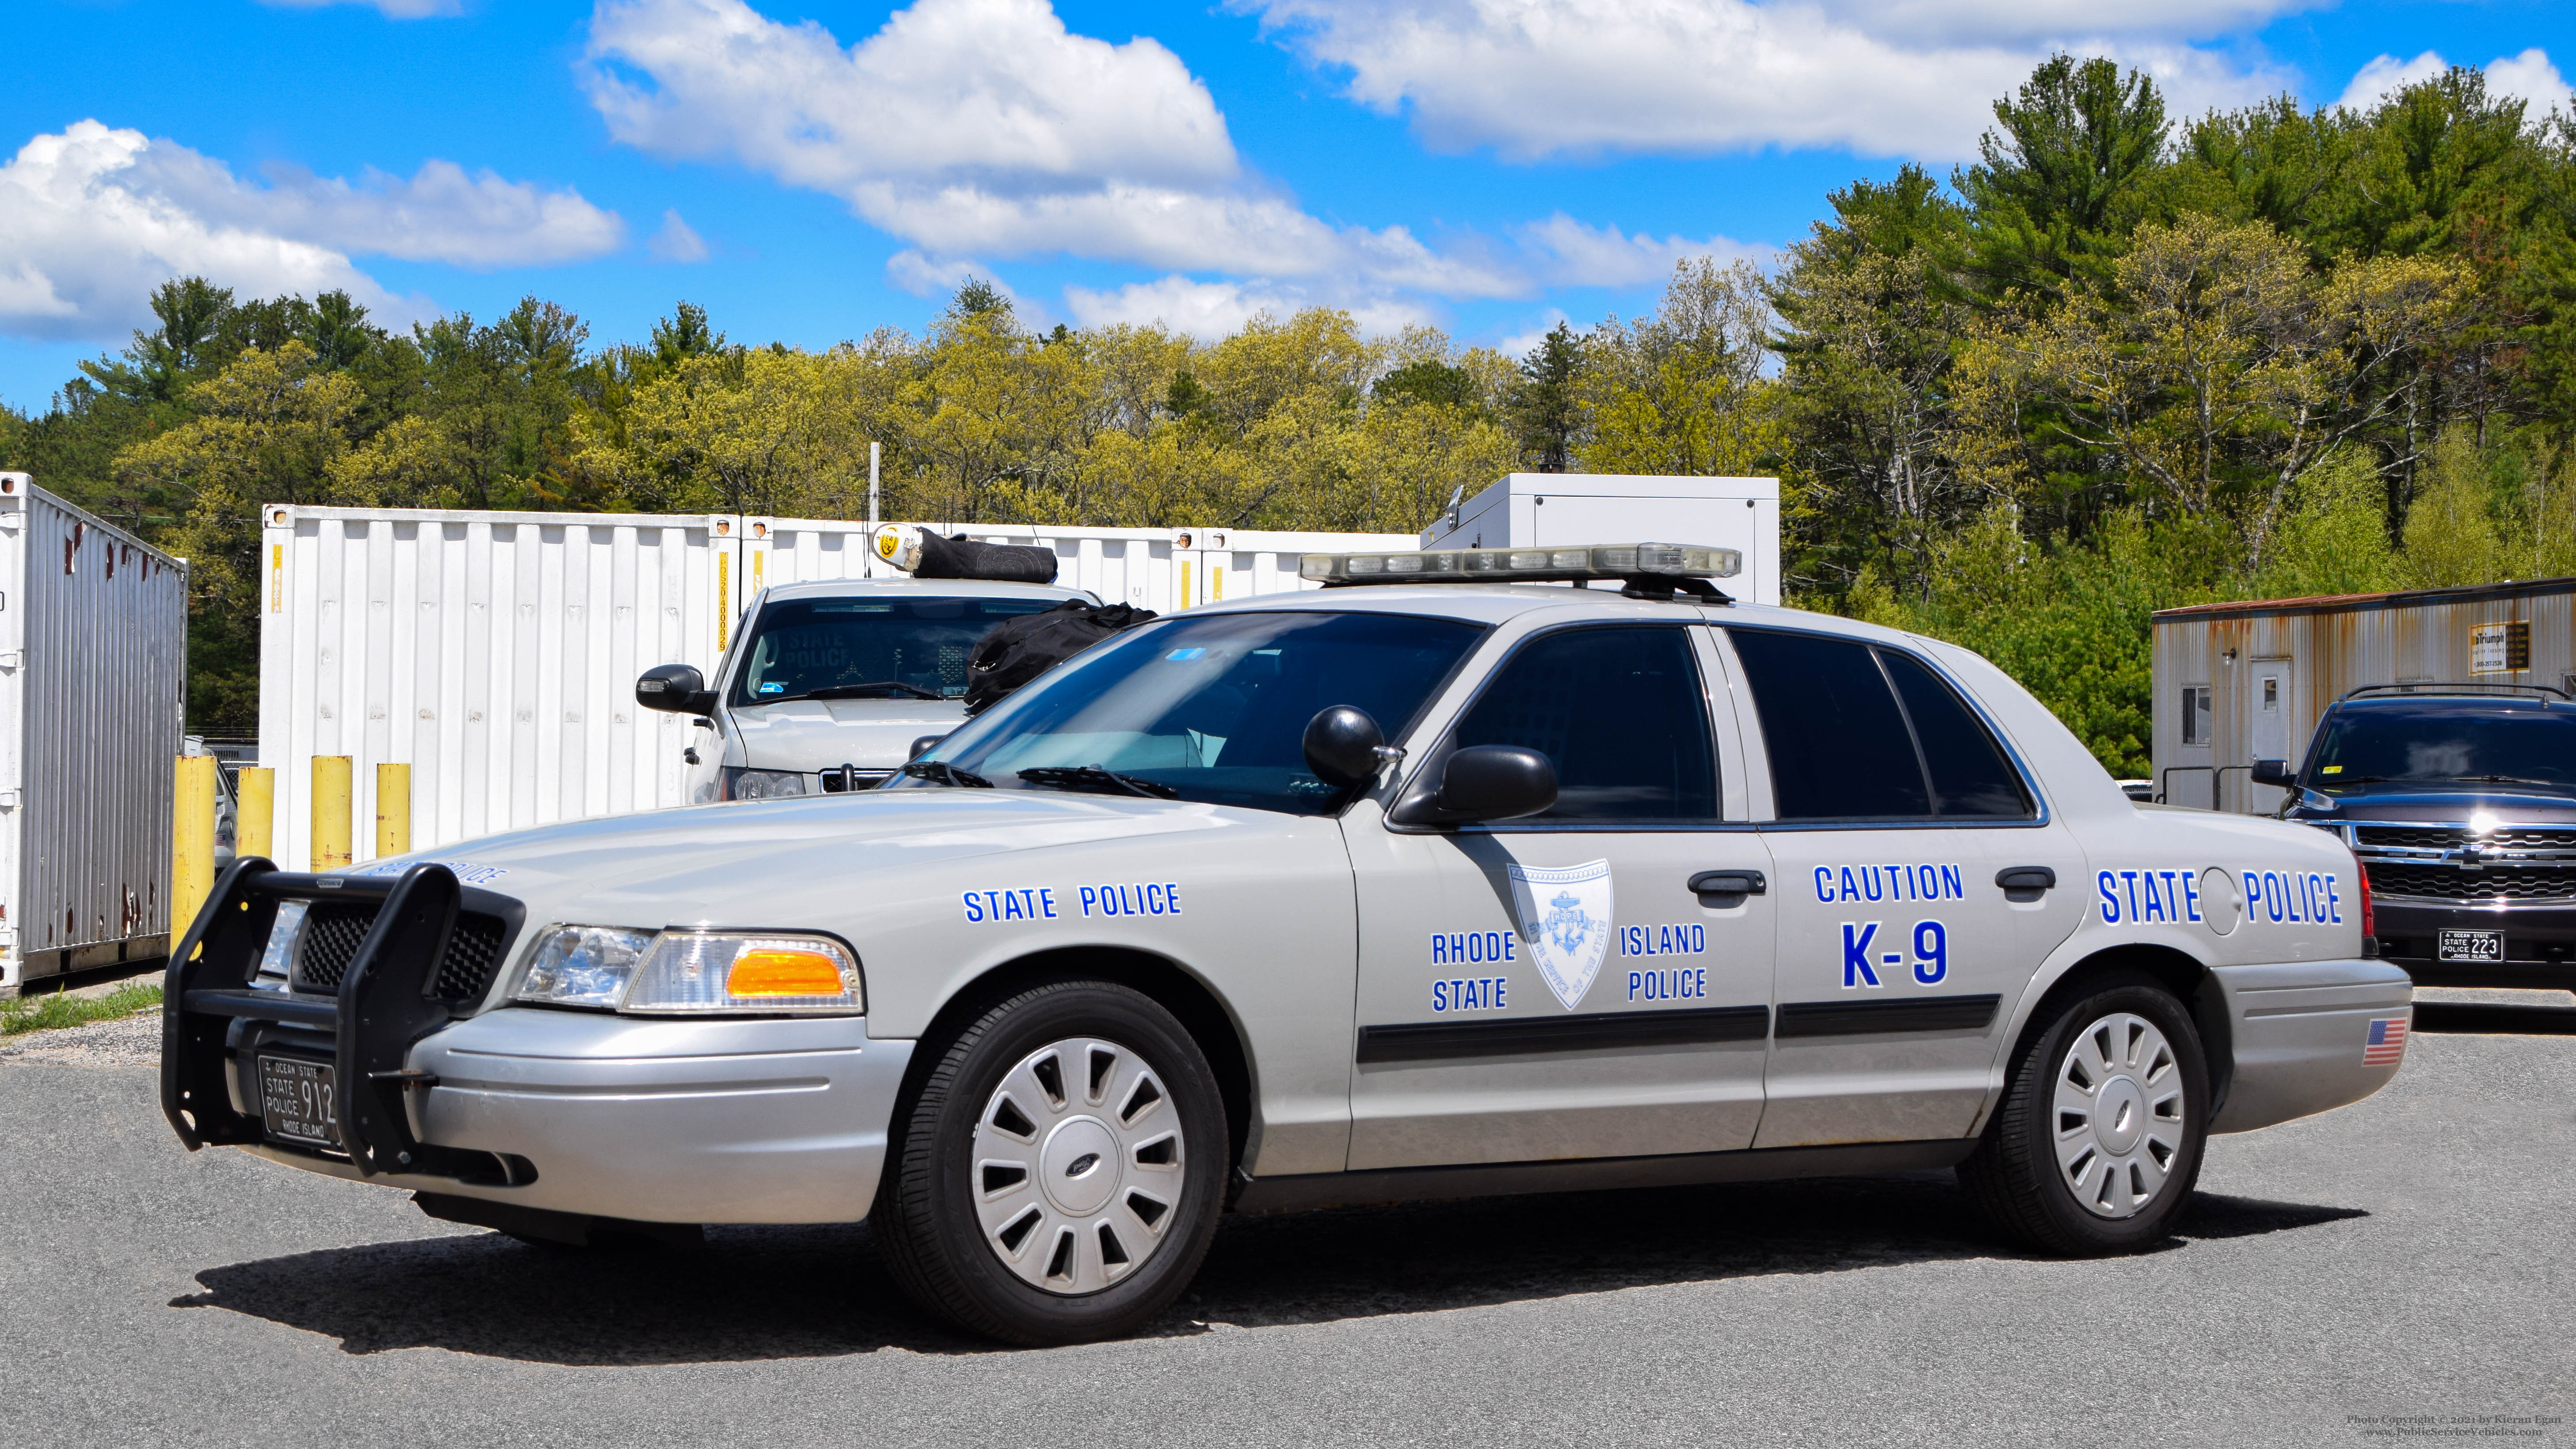 A photo  of Rhode Island State Police
            Cruiser 912, a 2009-2011 Ford Crown Victoria Police Interceptor             taken by Kieran Egan